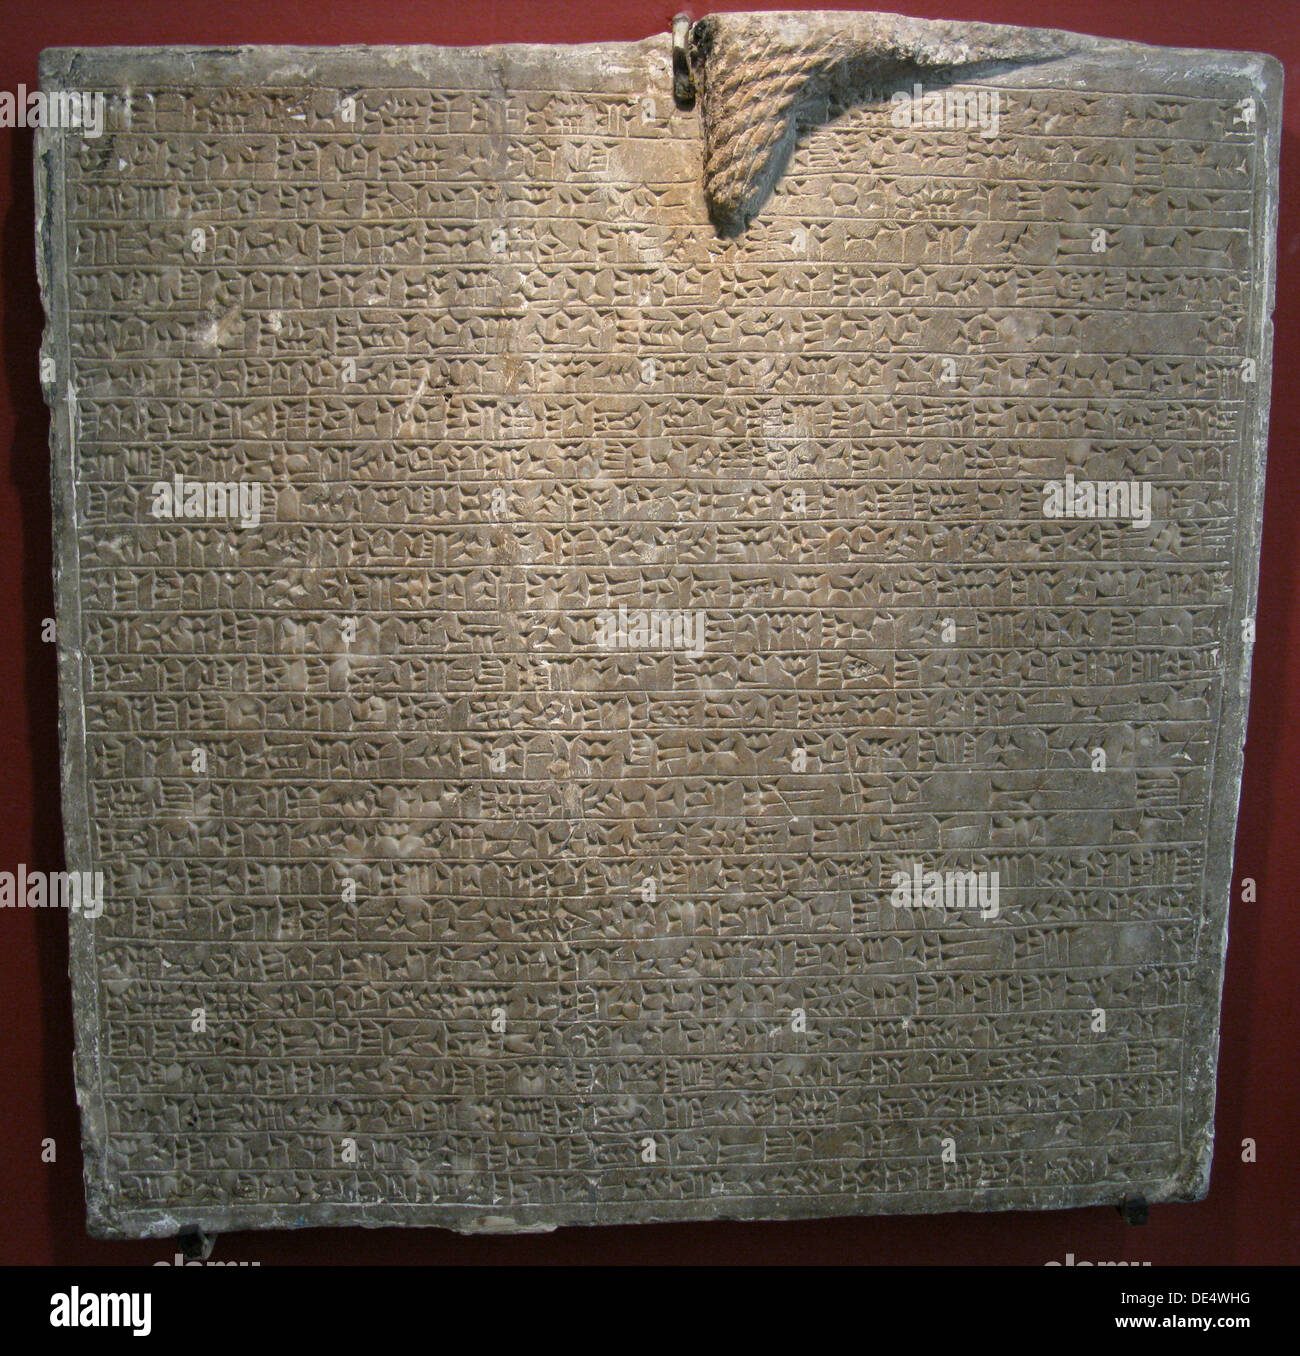 Inscribed slab from the palace of Sargon II in Dur-Sharrukin, Khorsabad, 8th cen. BC. Artist: Assyrian Art Stock Photo